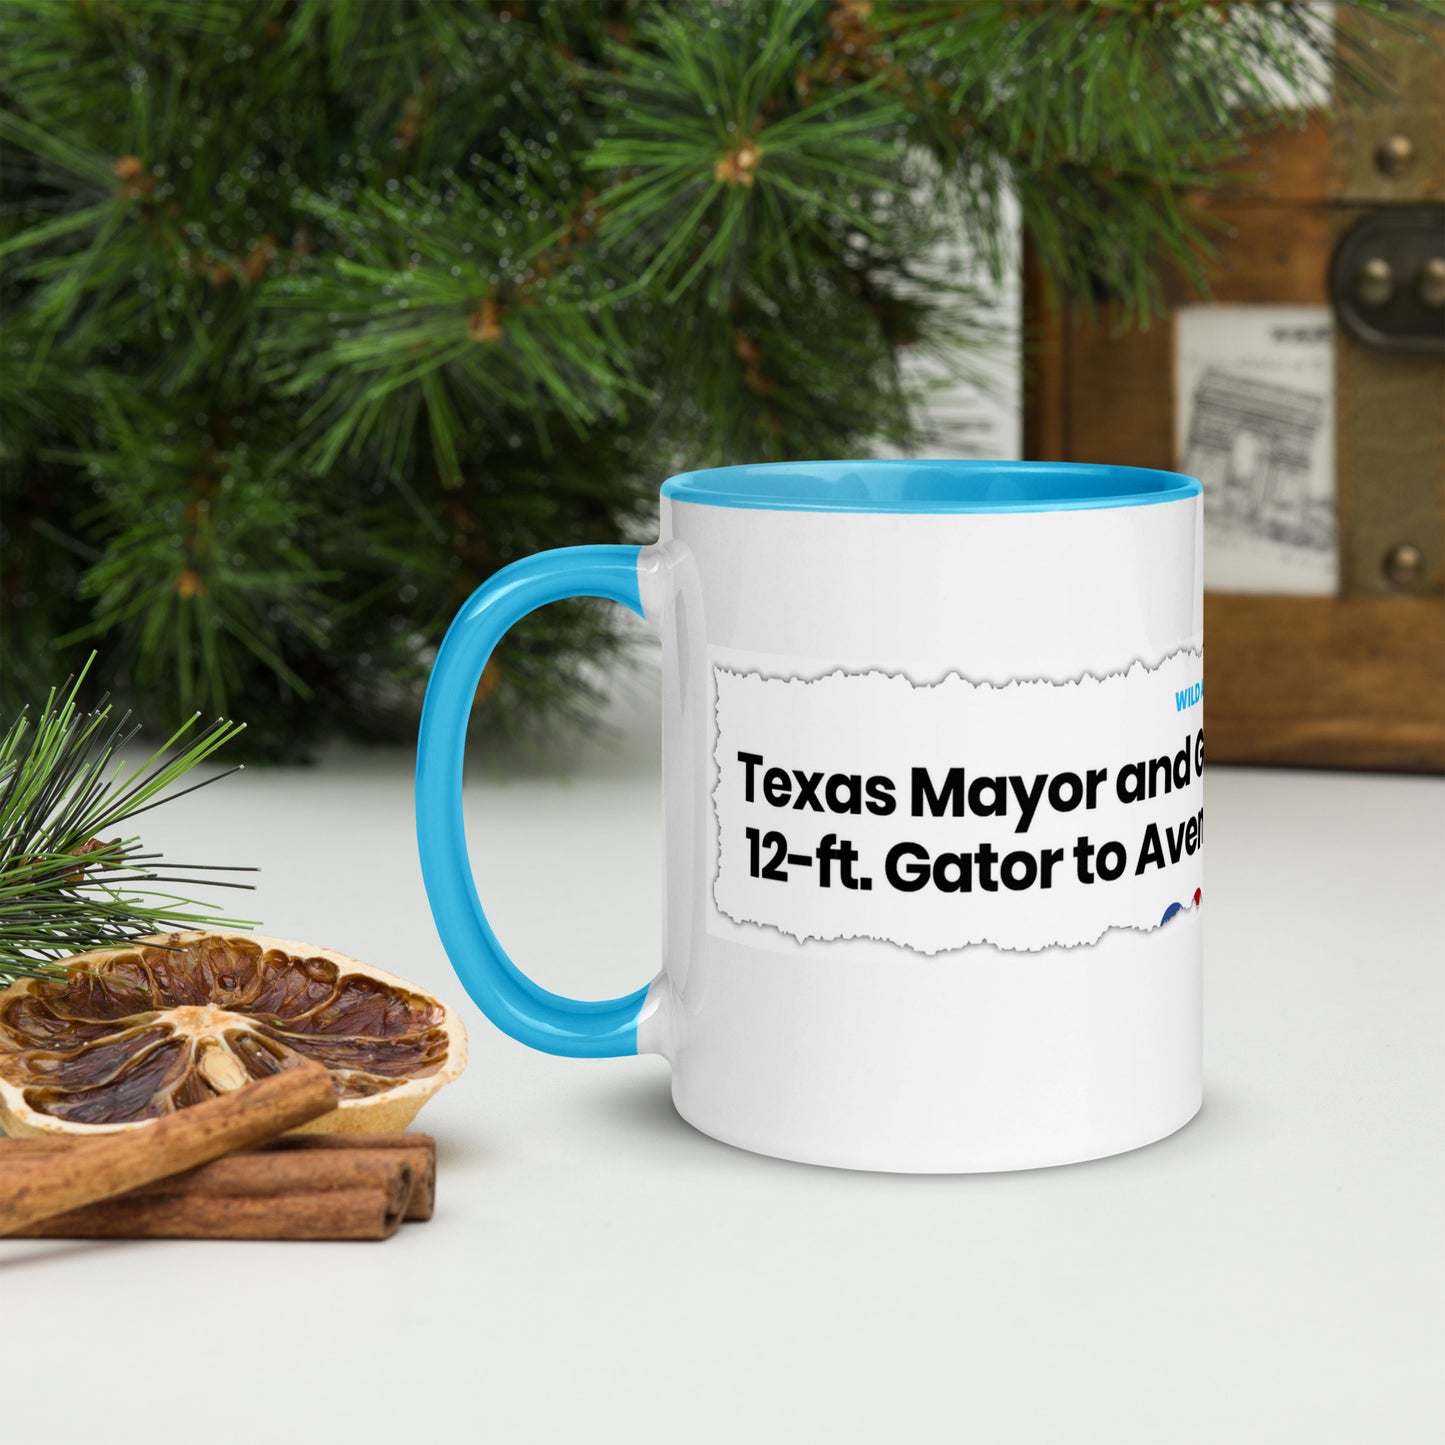 Headline Mug - Texas Mayor and Grandmother Shoots 12-ft. Gator To Avenge Dead Mini-Horse